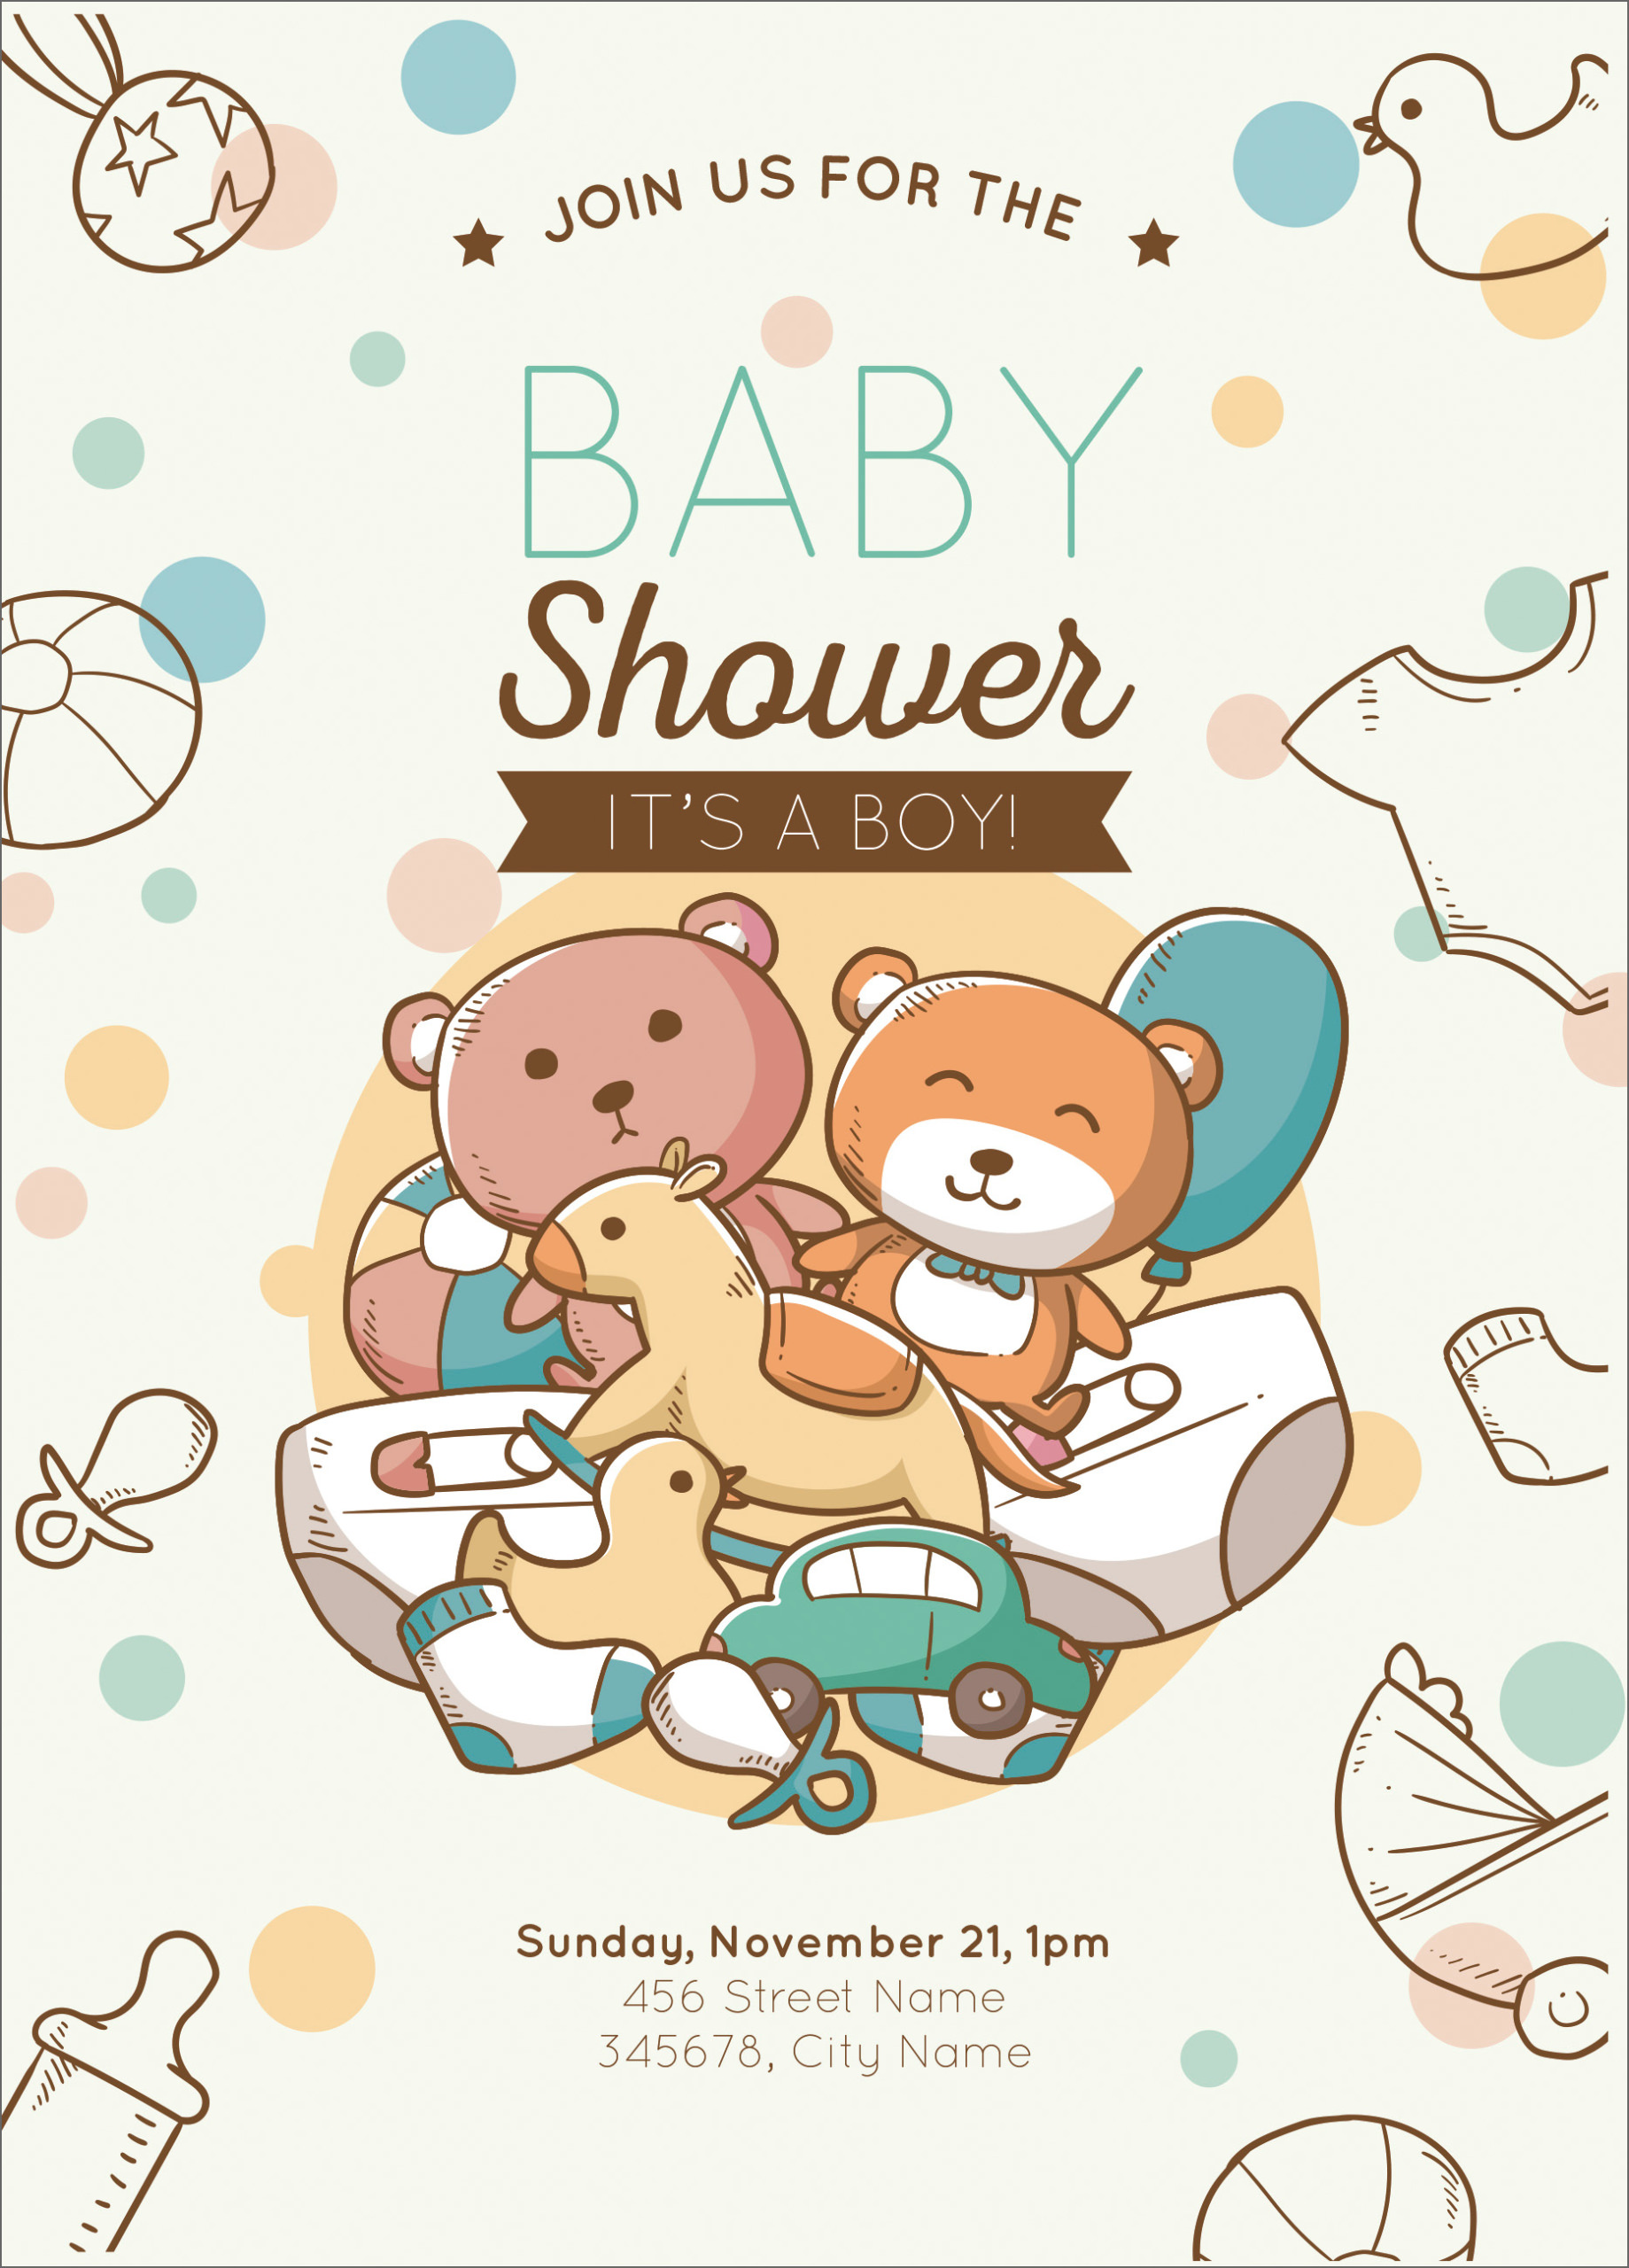 invitaci-n-editable-baby-shower-ni-a-baby-shower-baby-shower